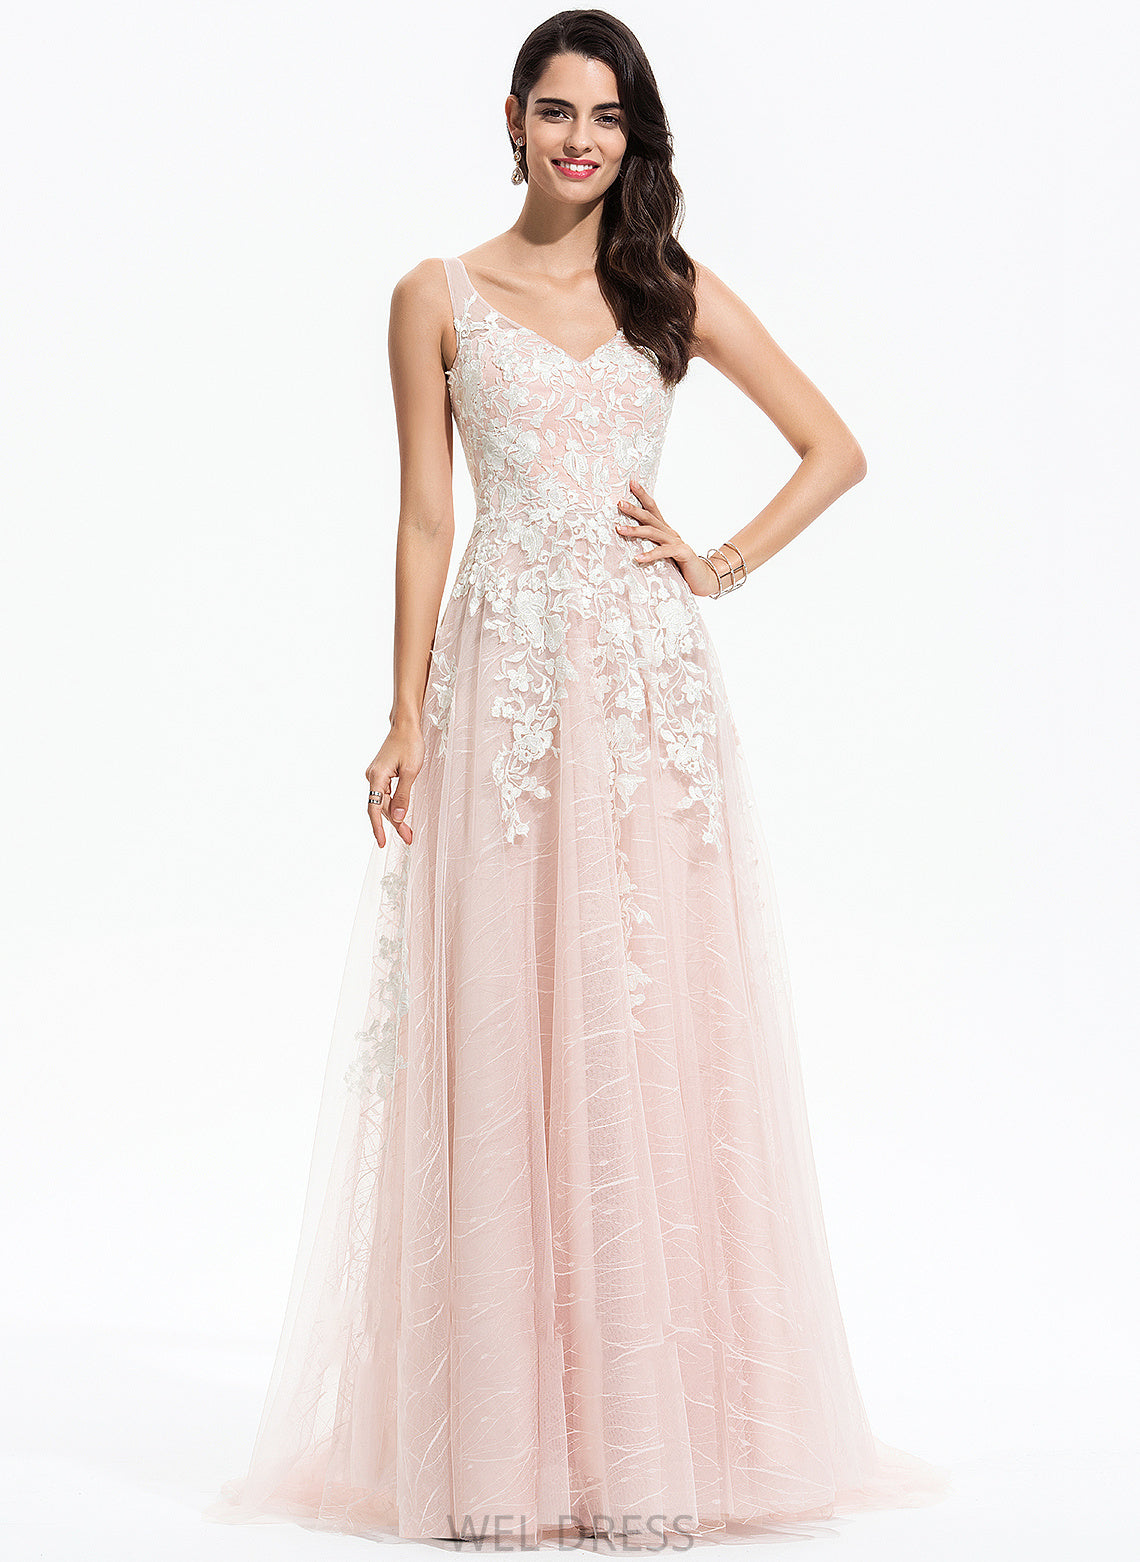 Skyla A-Line Wedding Wedding Dresses V-neck Lace Train Tulle Sweep Dress With